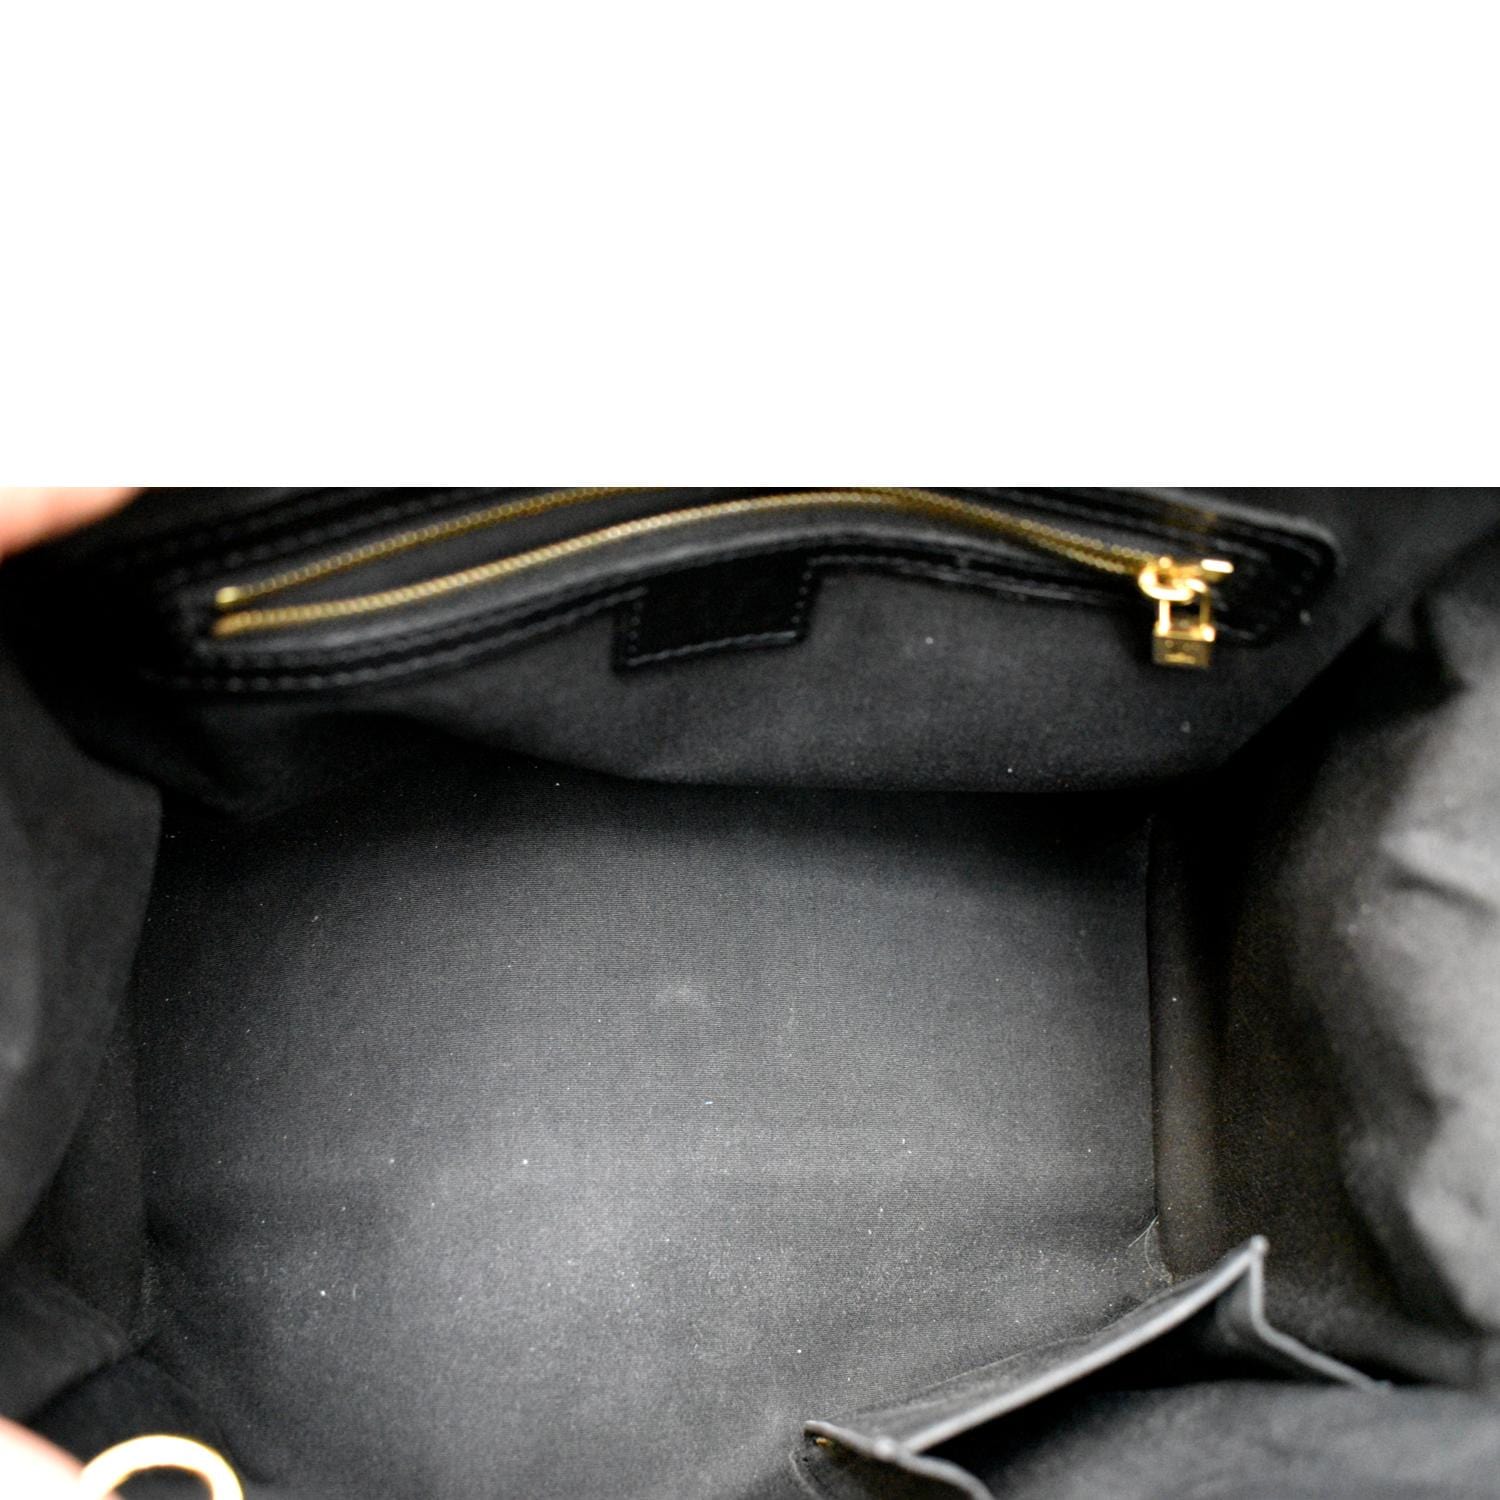 Louis+Vuitton+Josephine+Top+Handle+Bag+PM+Green+Canvas for sale online